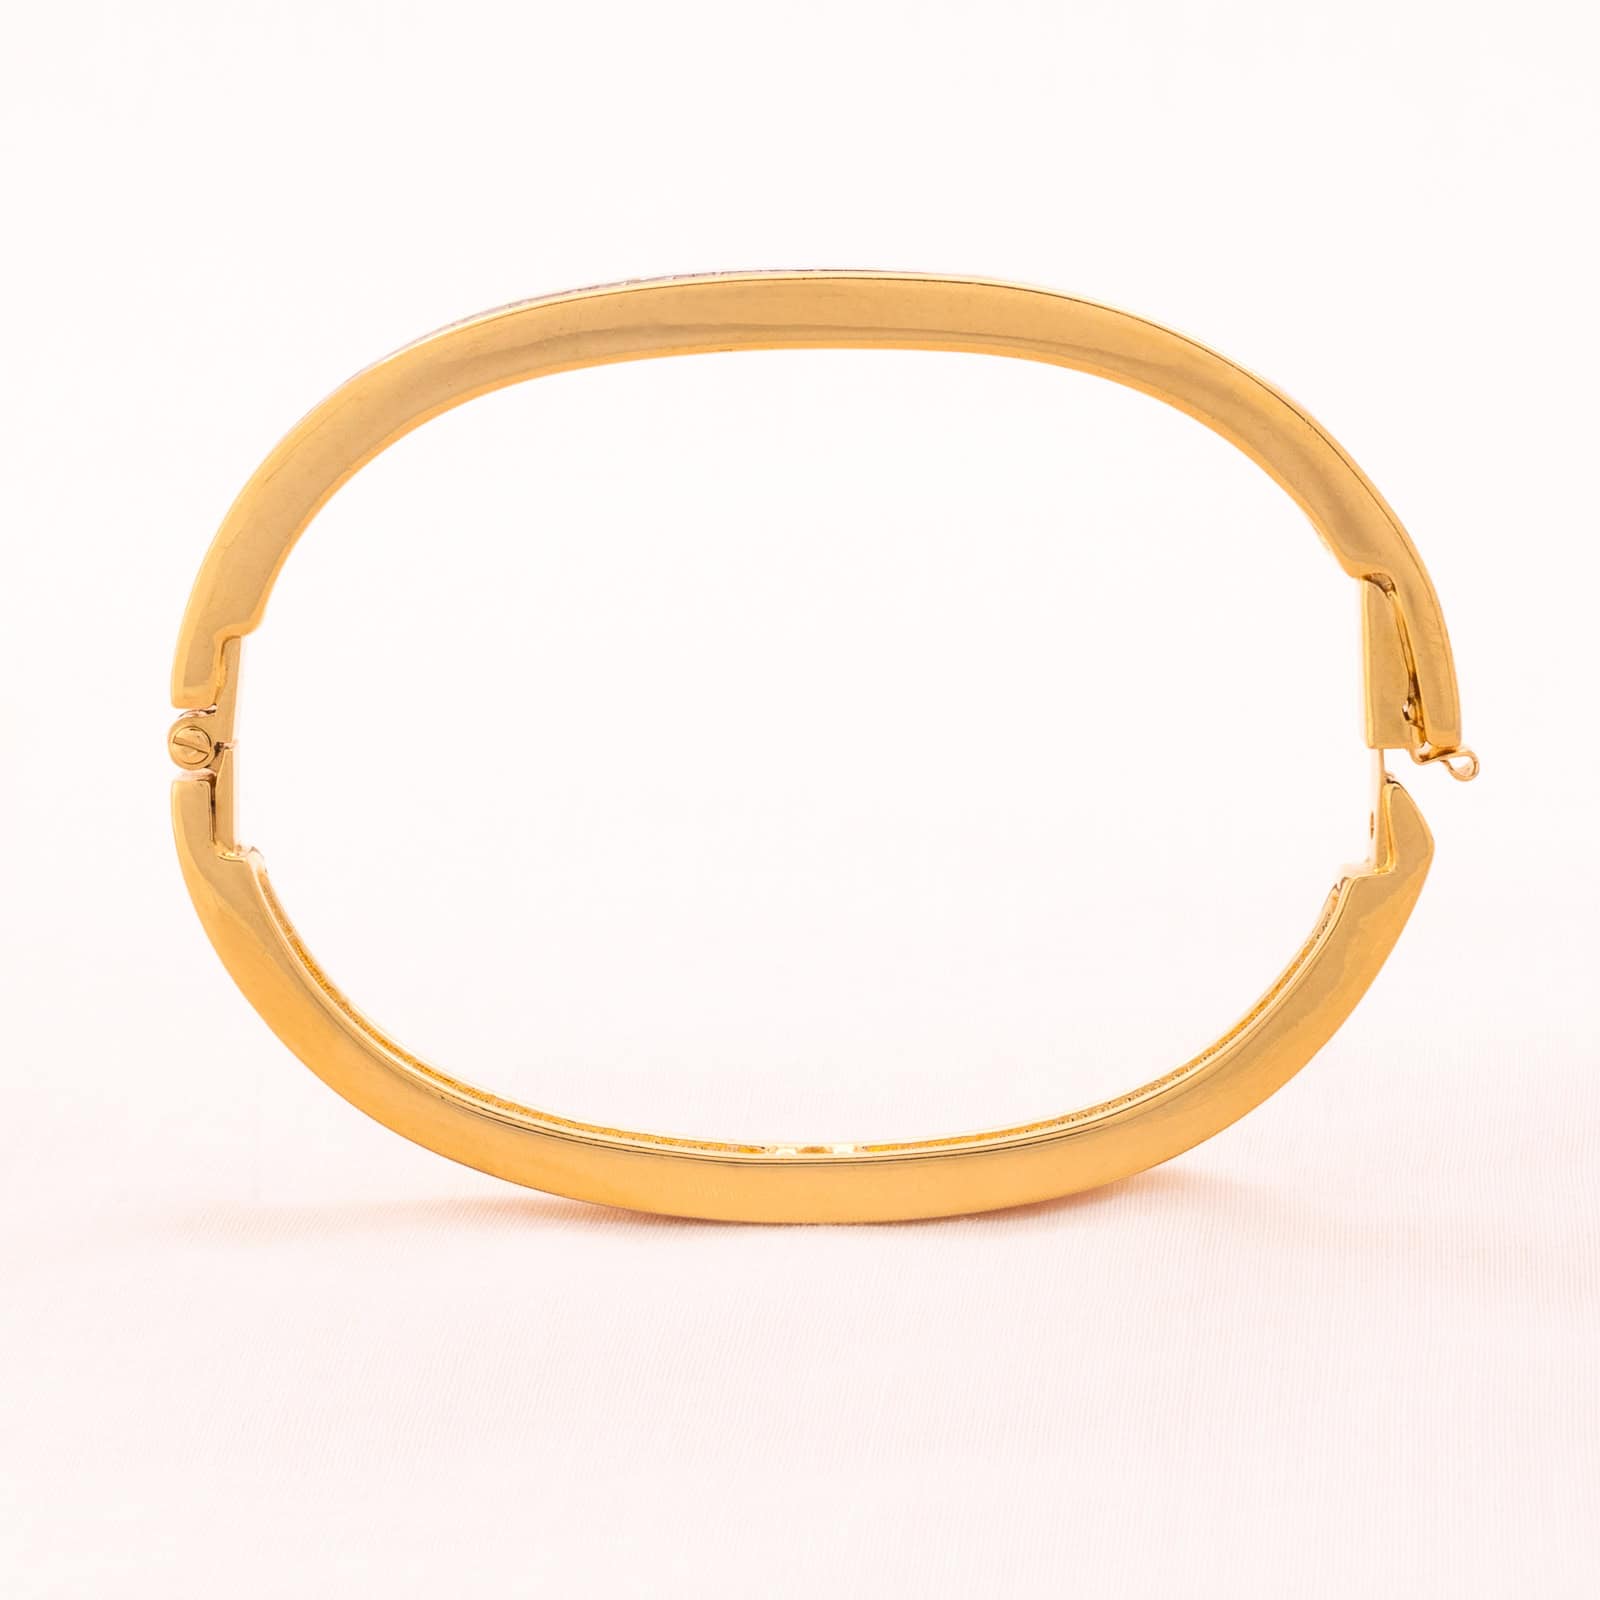 Swarovski-Armreif-vergoldet-ovale-Form-Seitenansicht